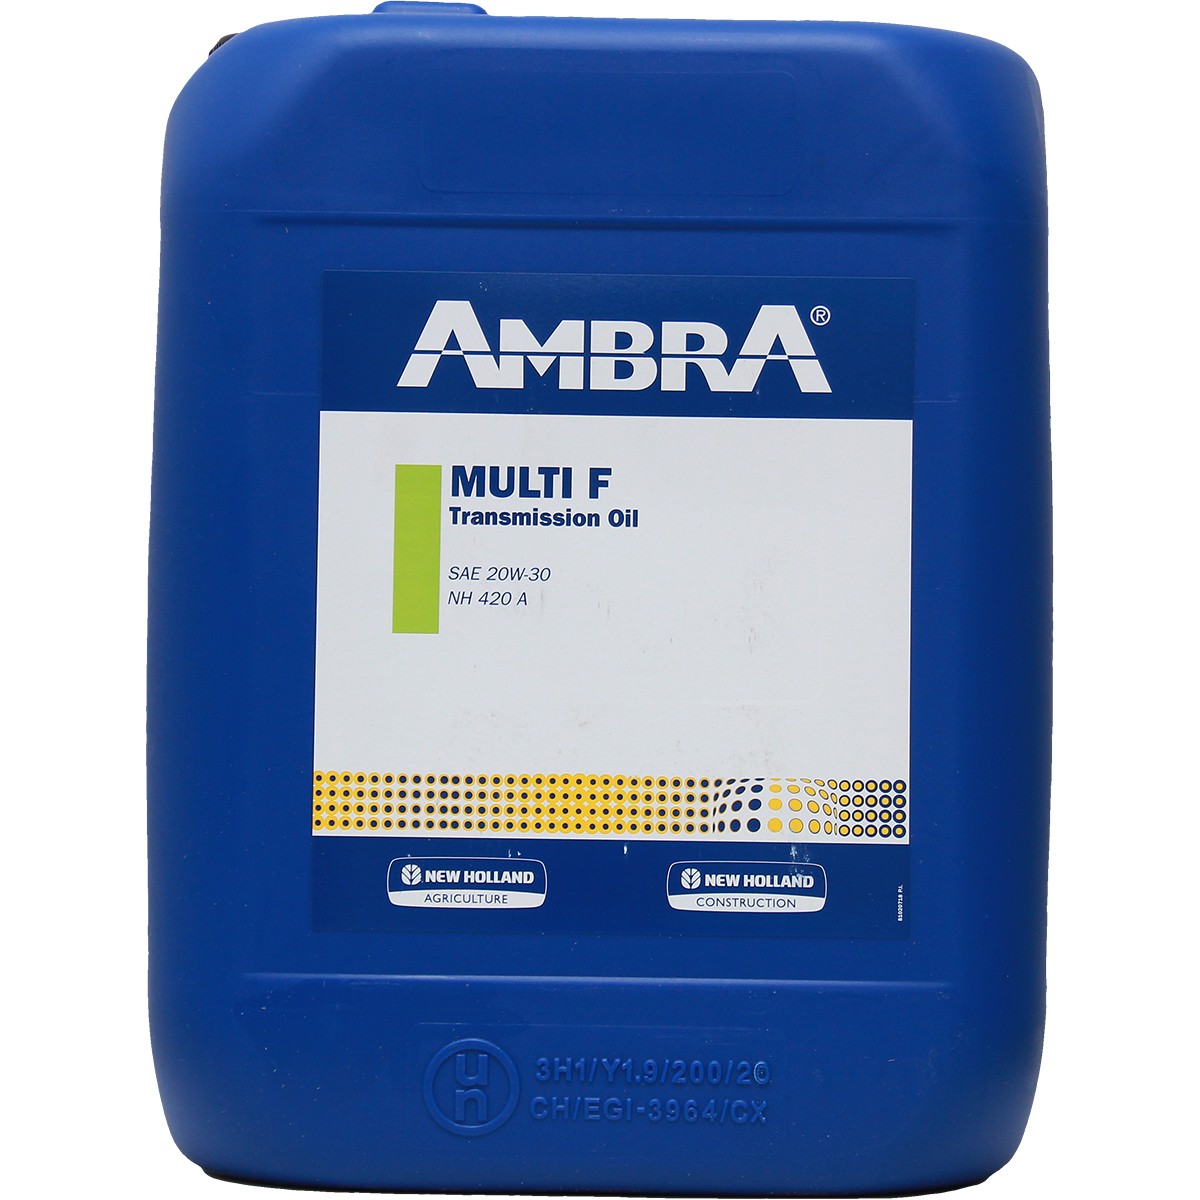 2695 AMBRA Getriebeöl für MULTICAR online bestellen